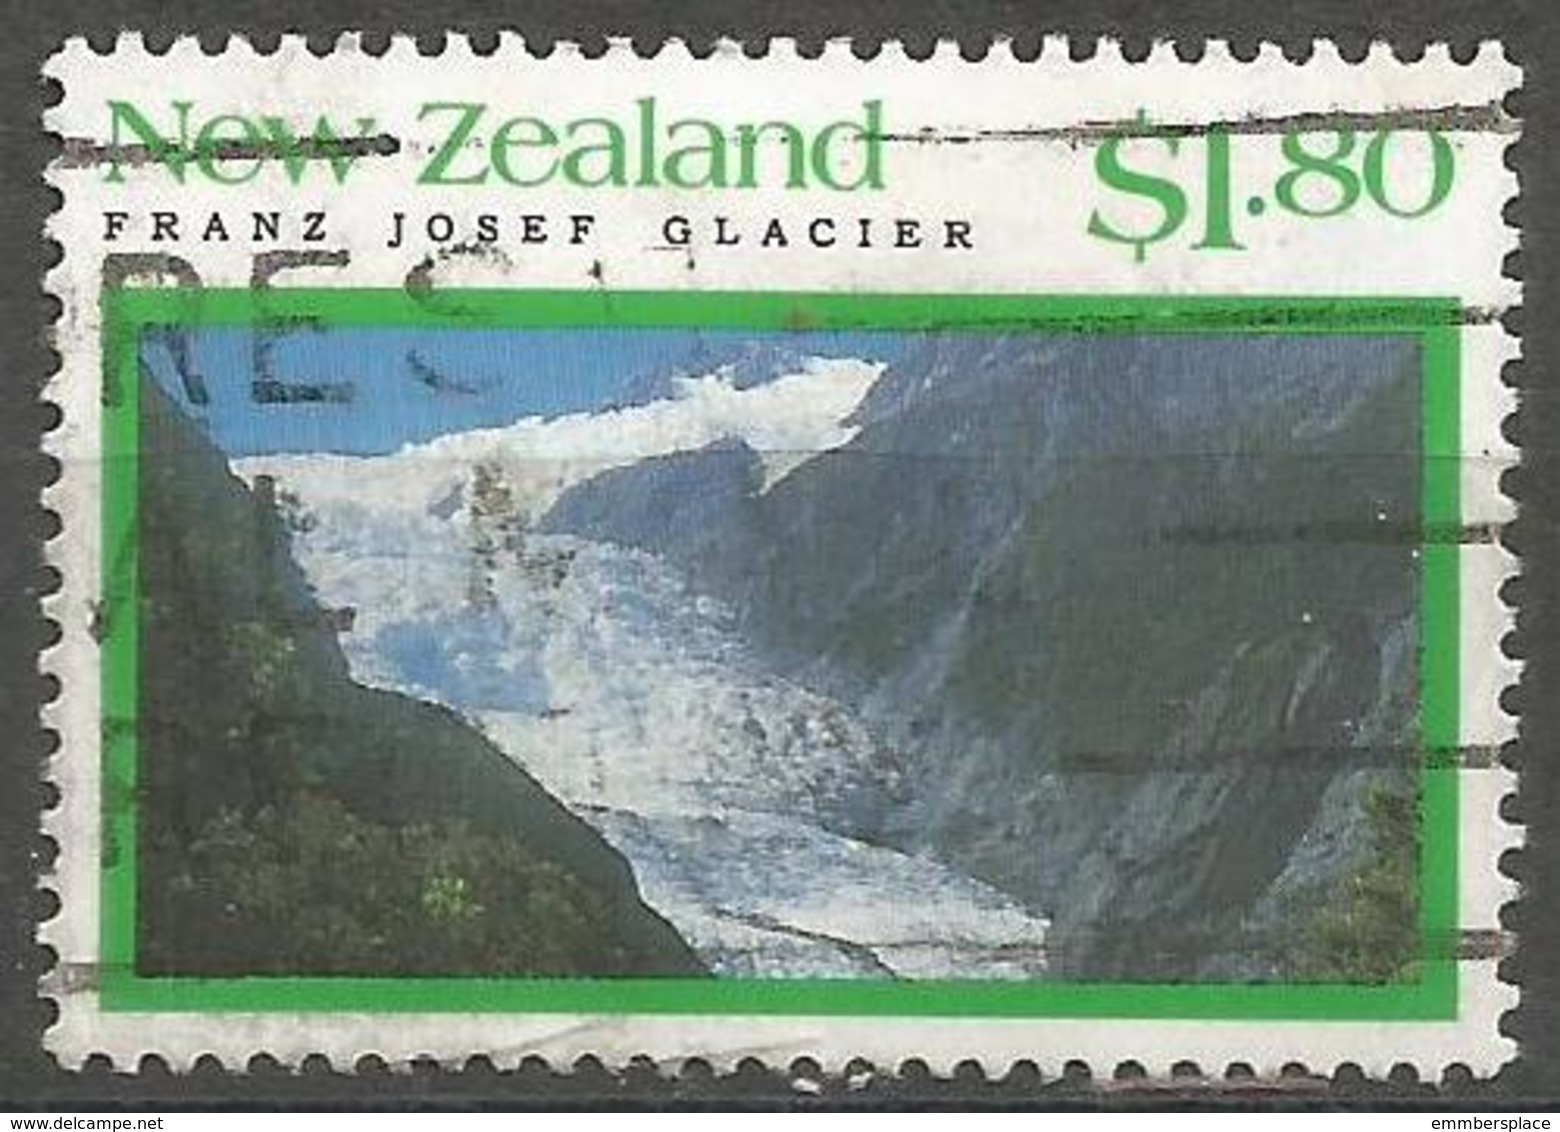 New Zealand - 1992 Franz Josef Glacier $1.80 Used  SG 1680 - Used Stamps